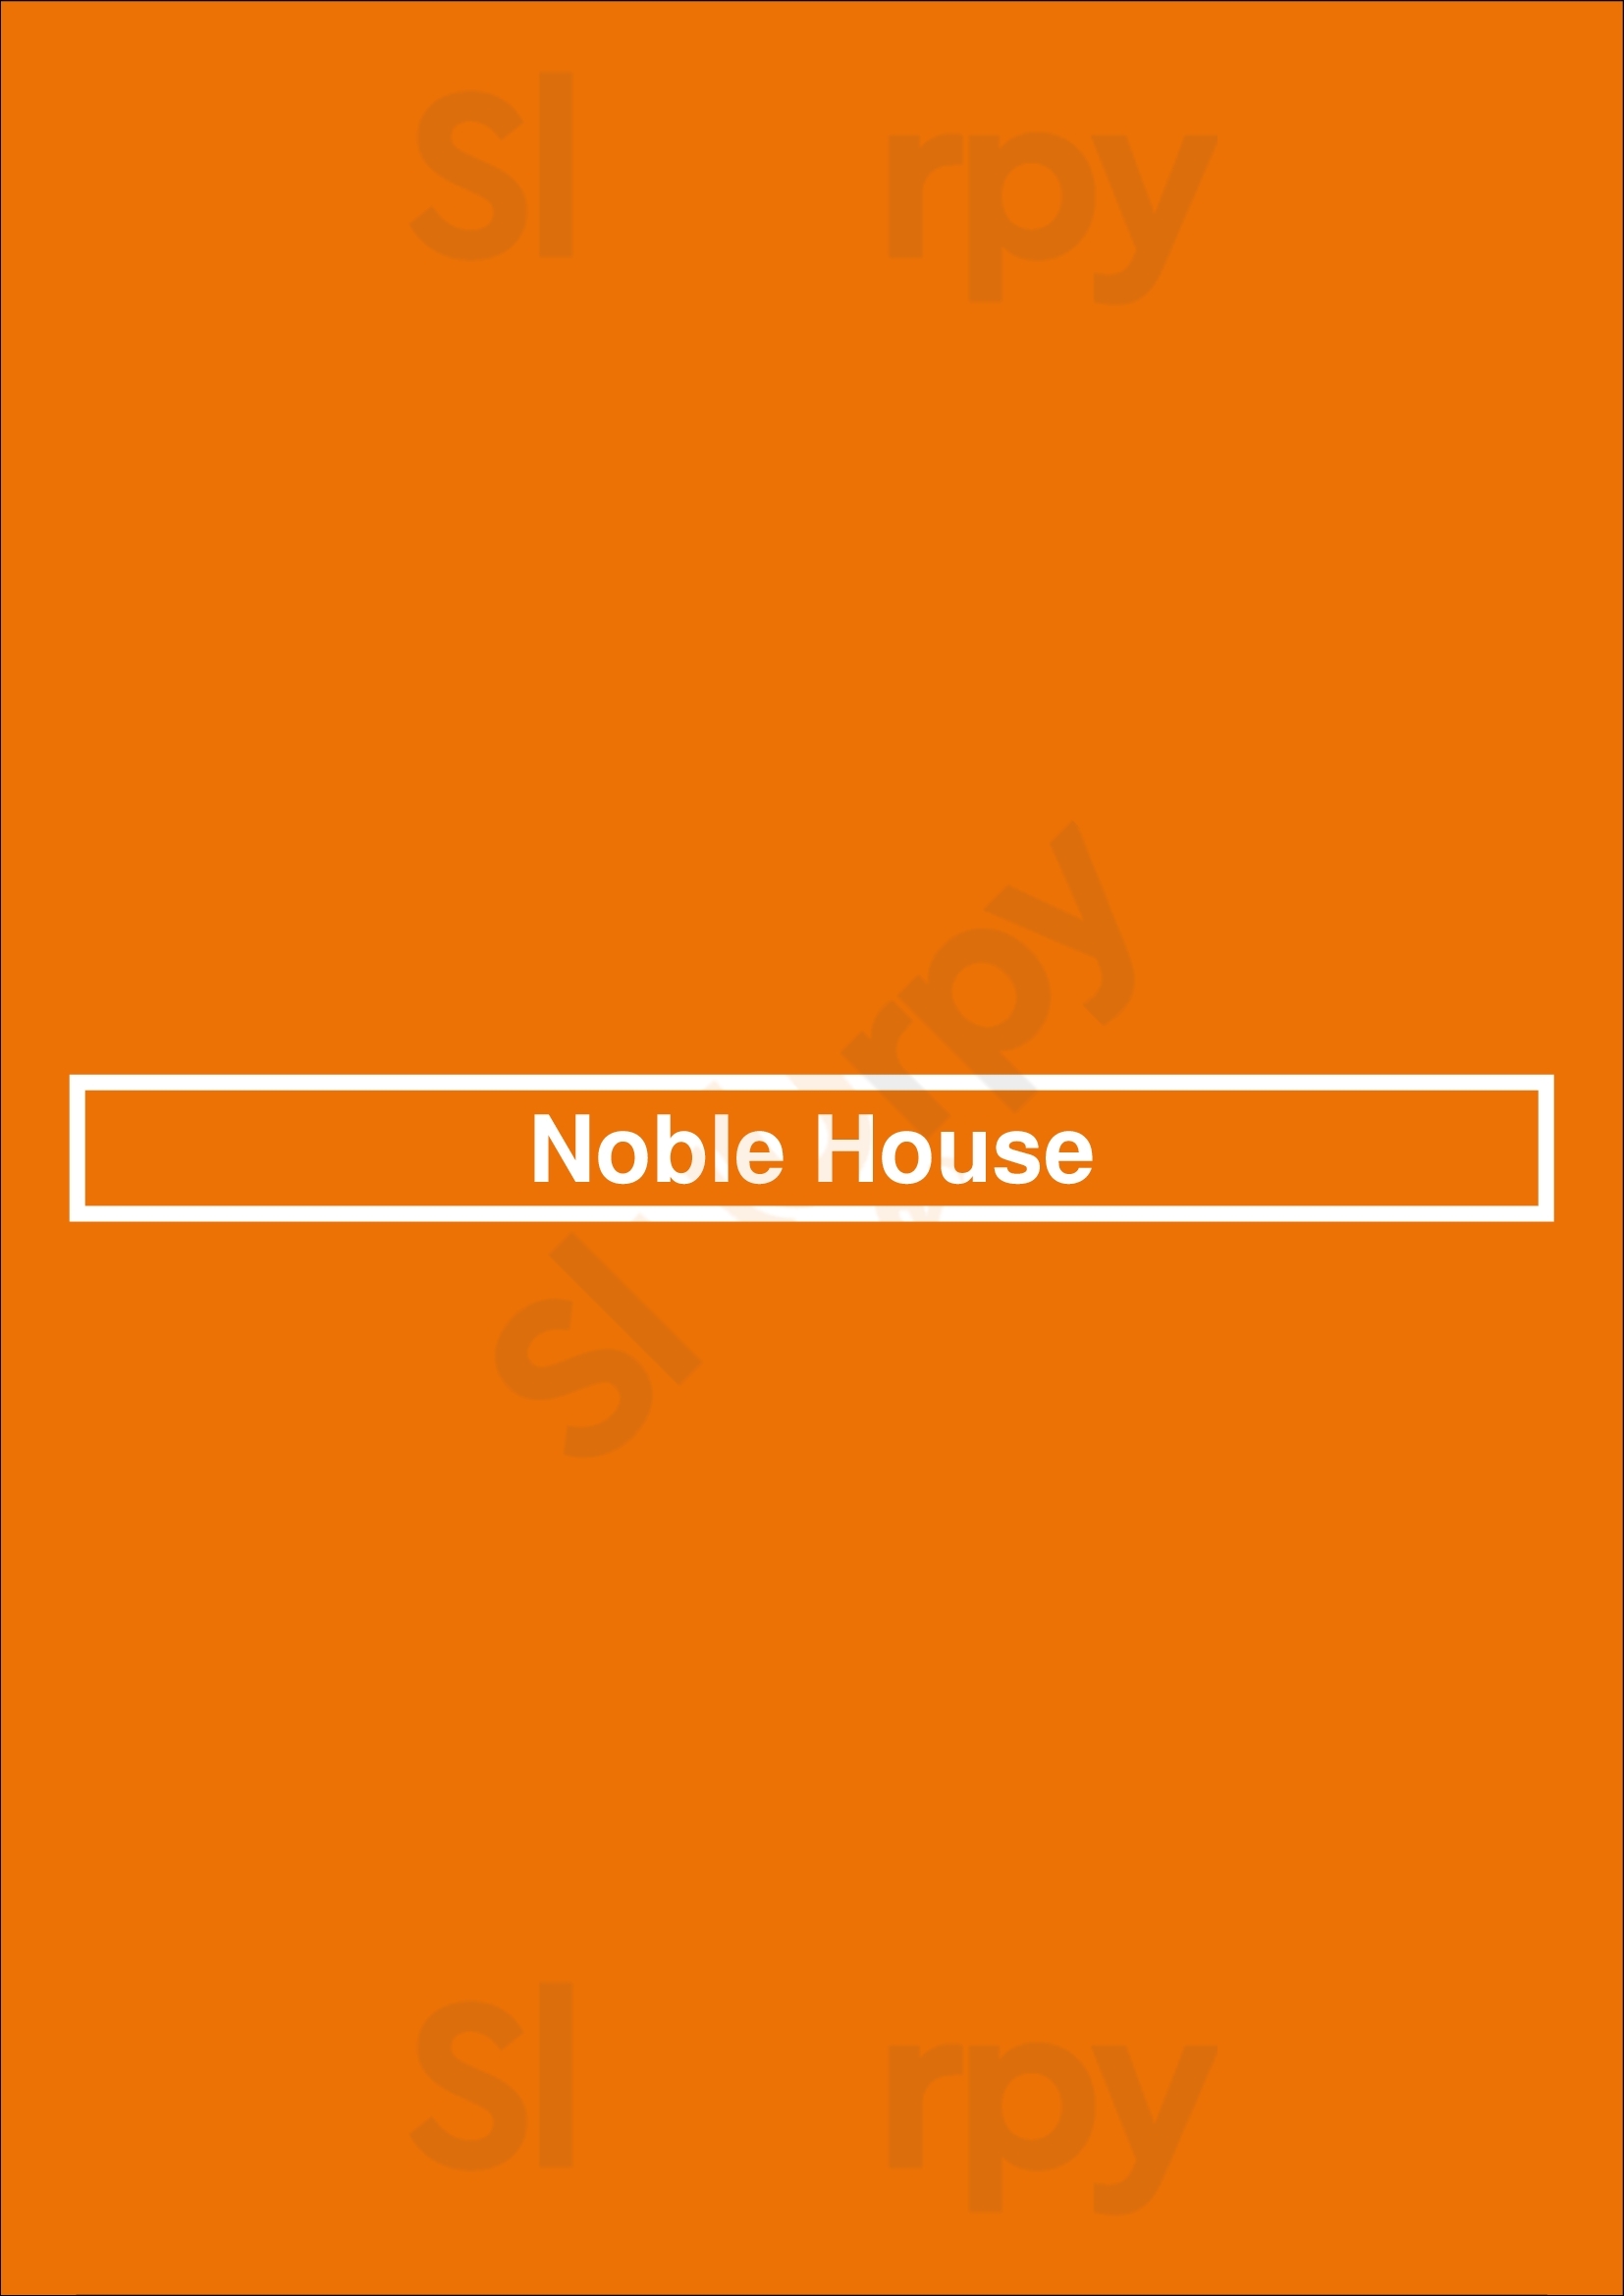 Noble House Cardiff Menu - 1